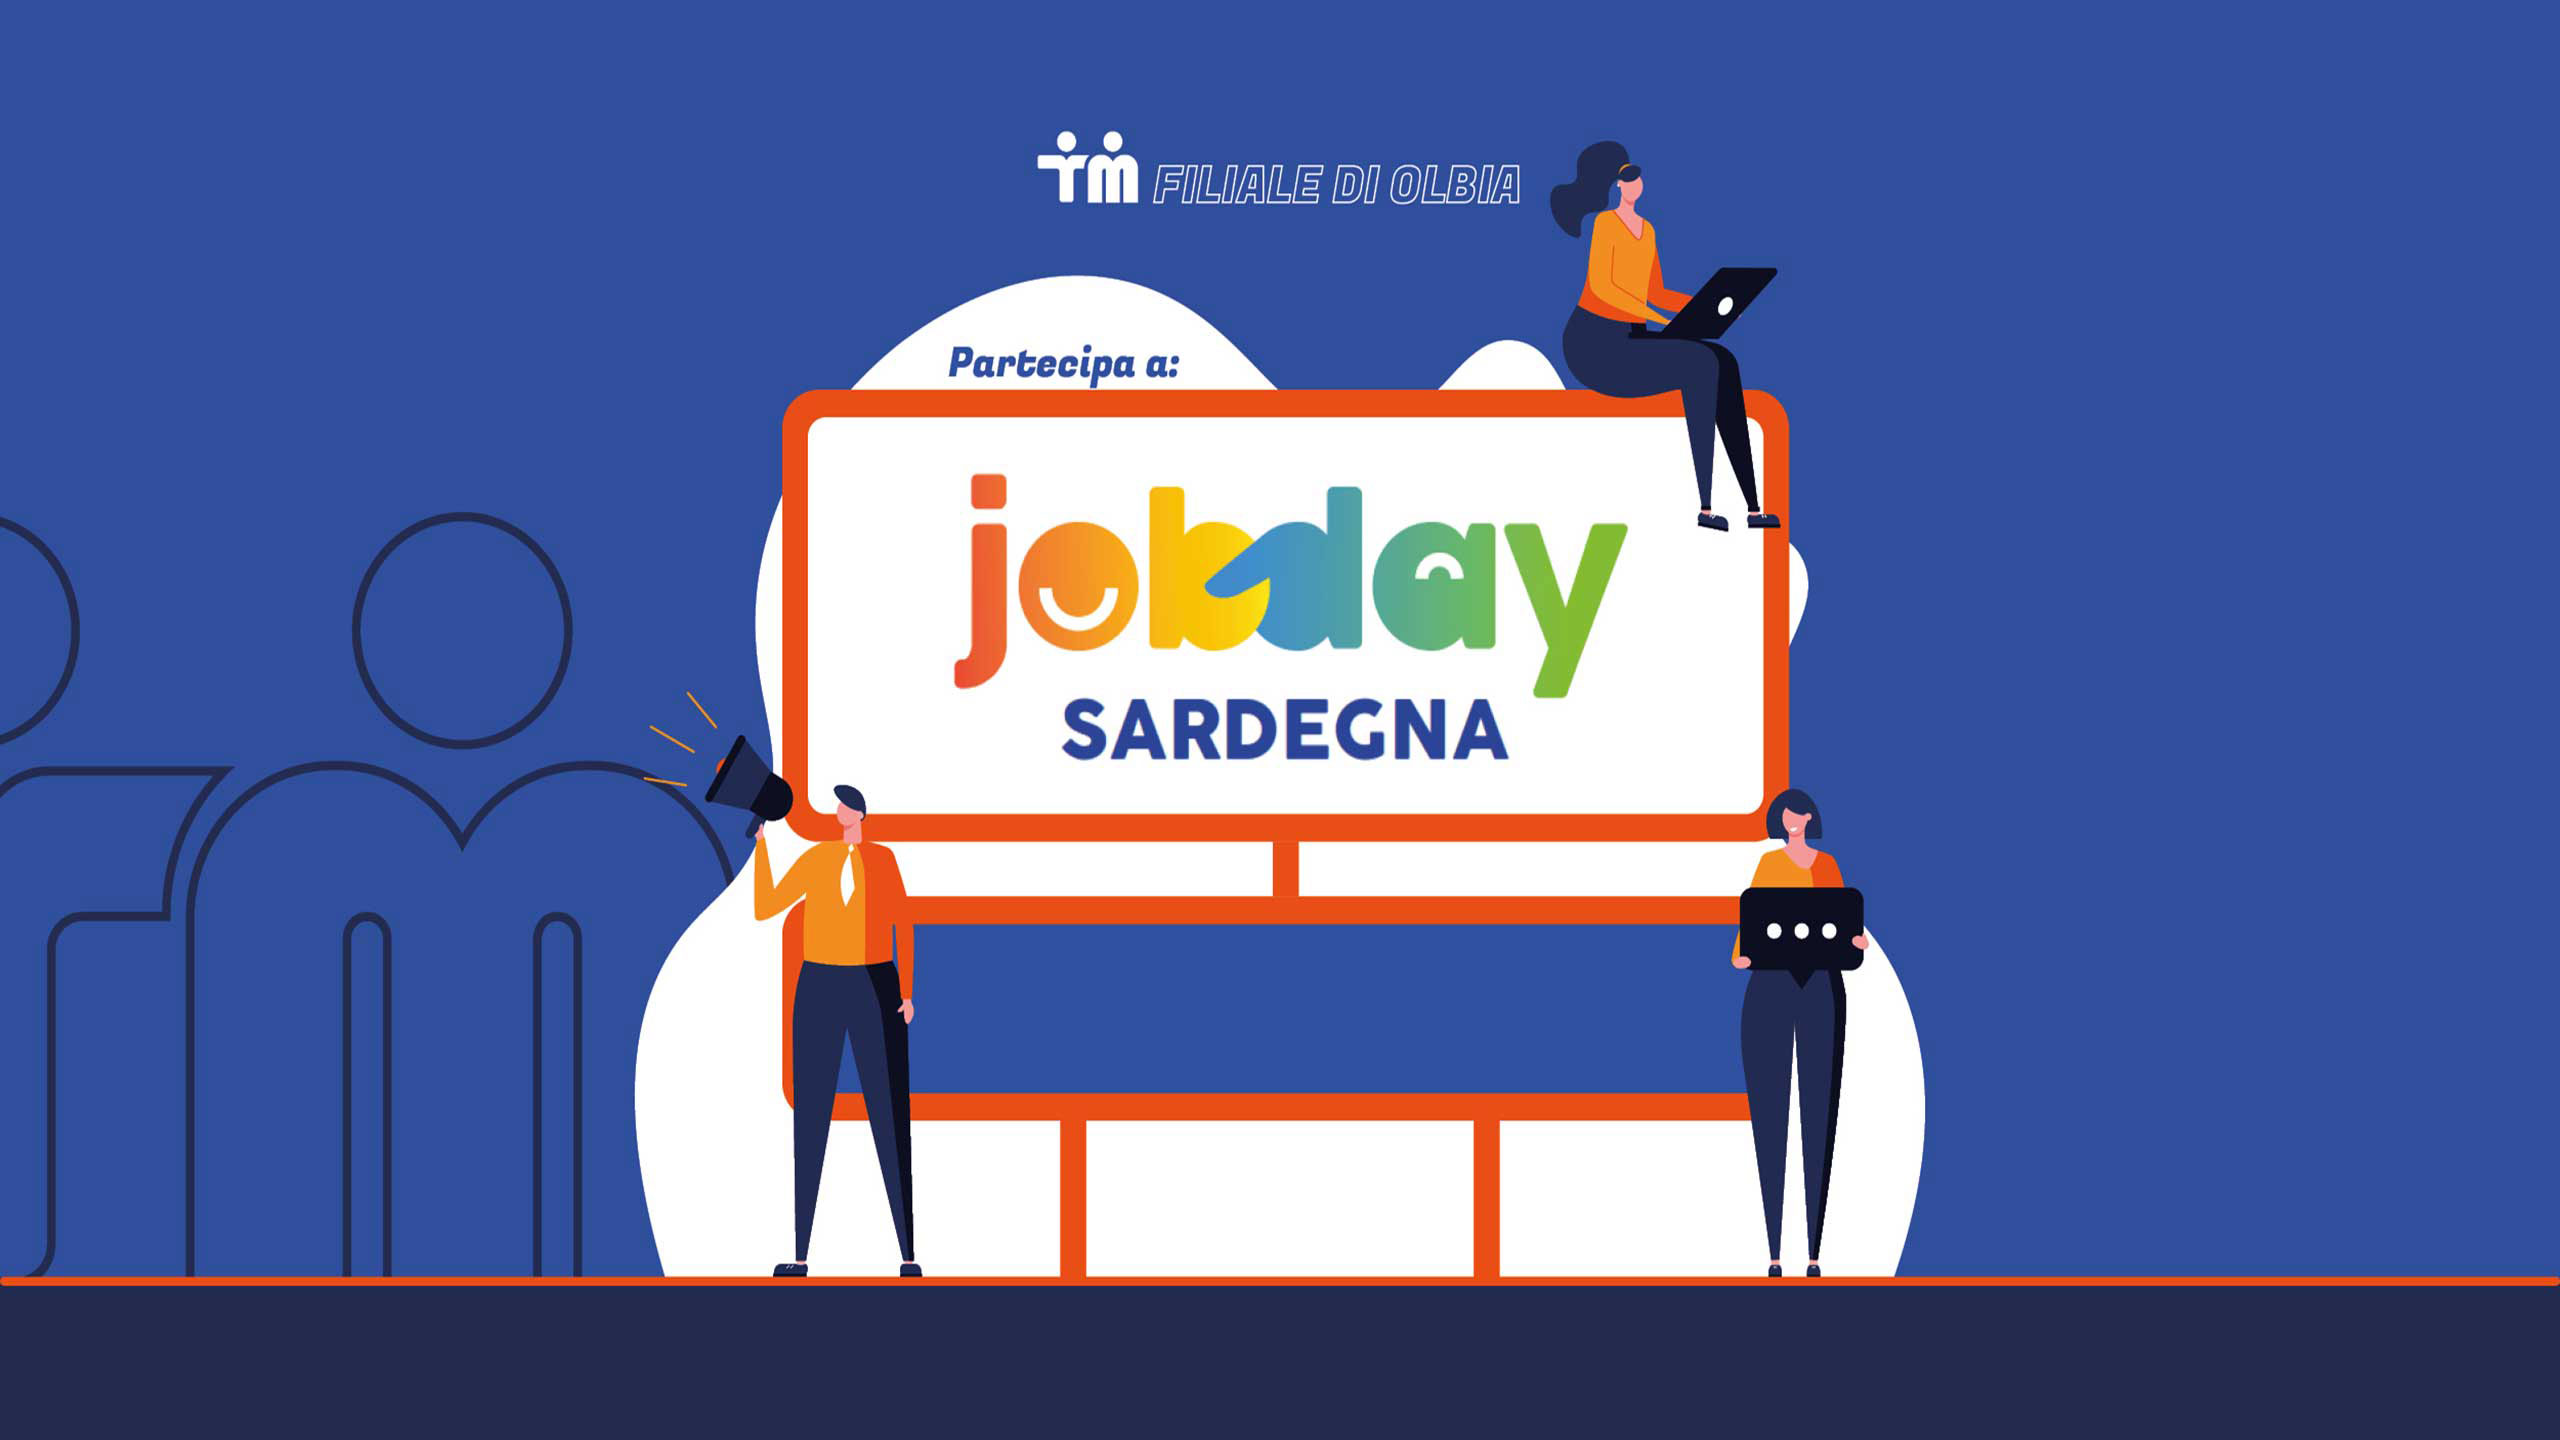 Job Day Sardegna